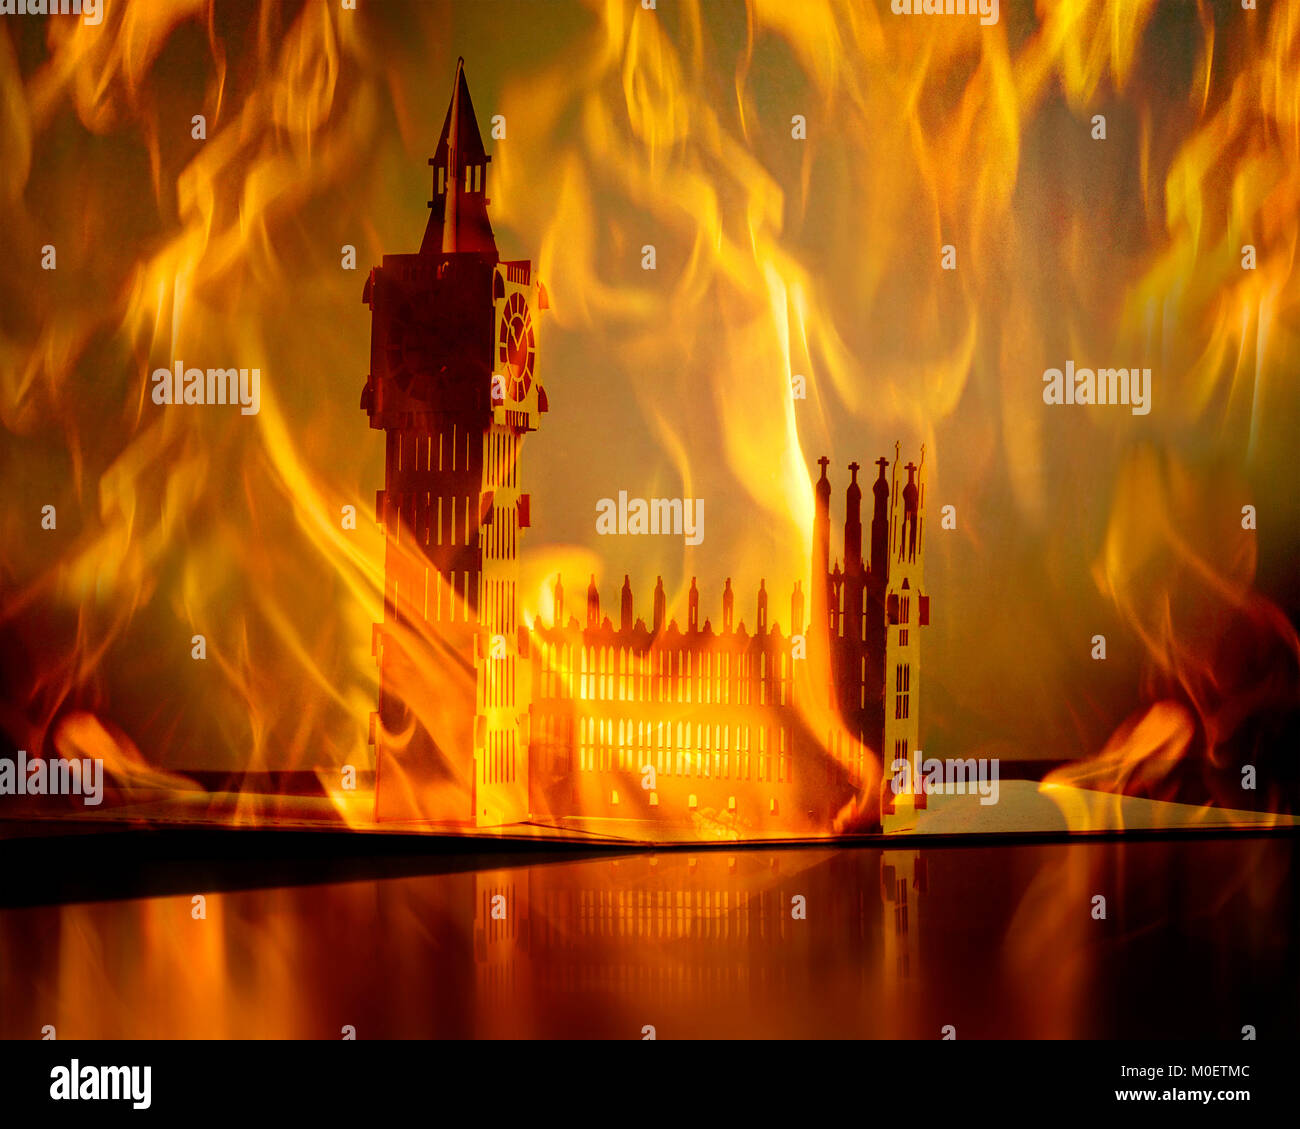 CONCEPT PHOTGRAPHY: London's Burning Stock Photo